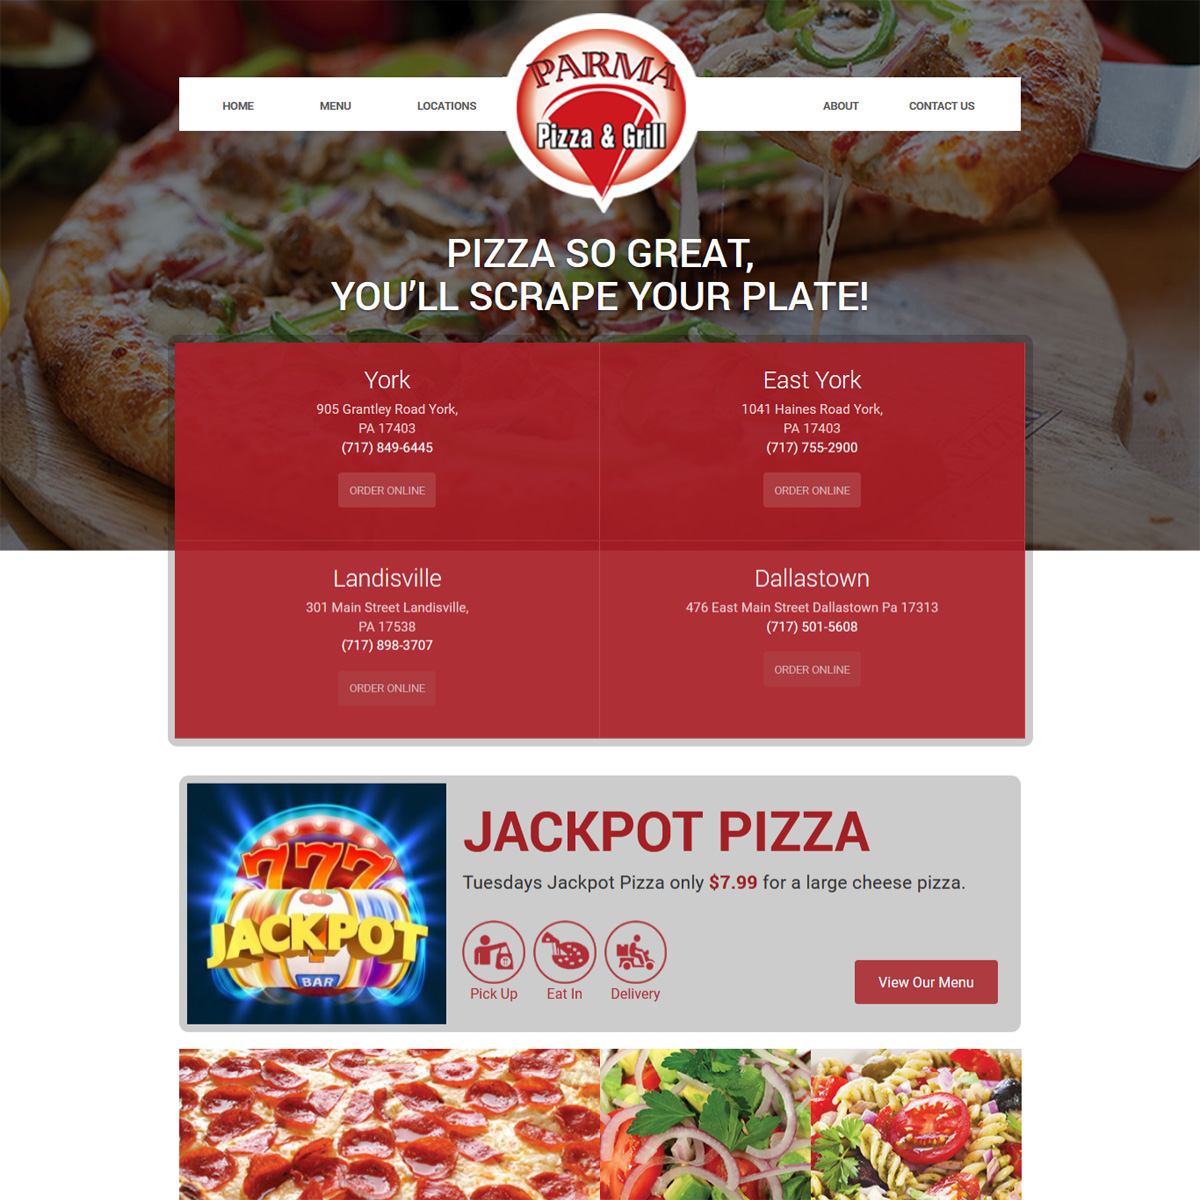 Parma Pizza & Grill pizzeria website design